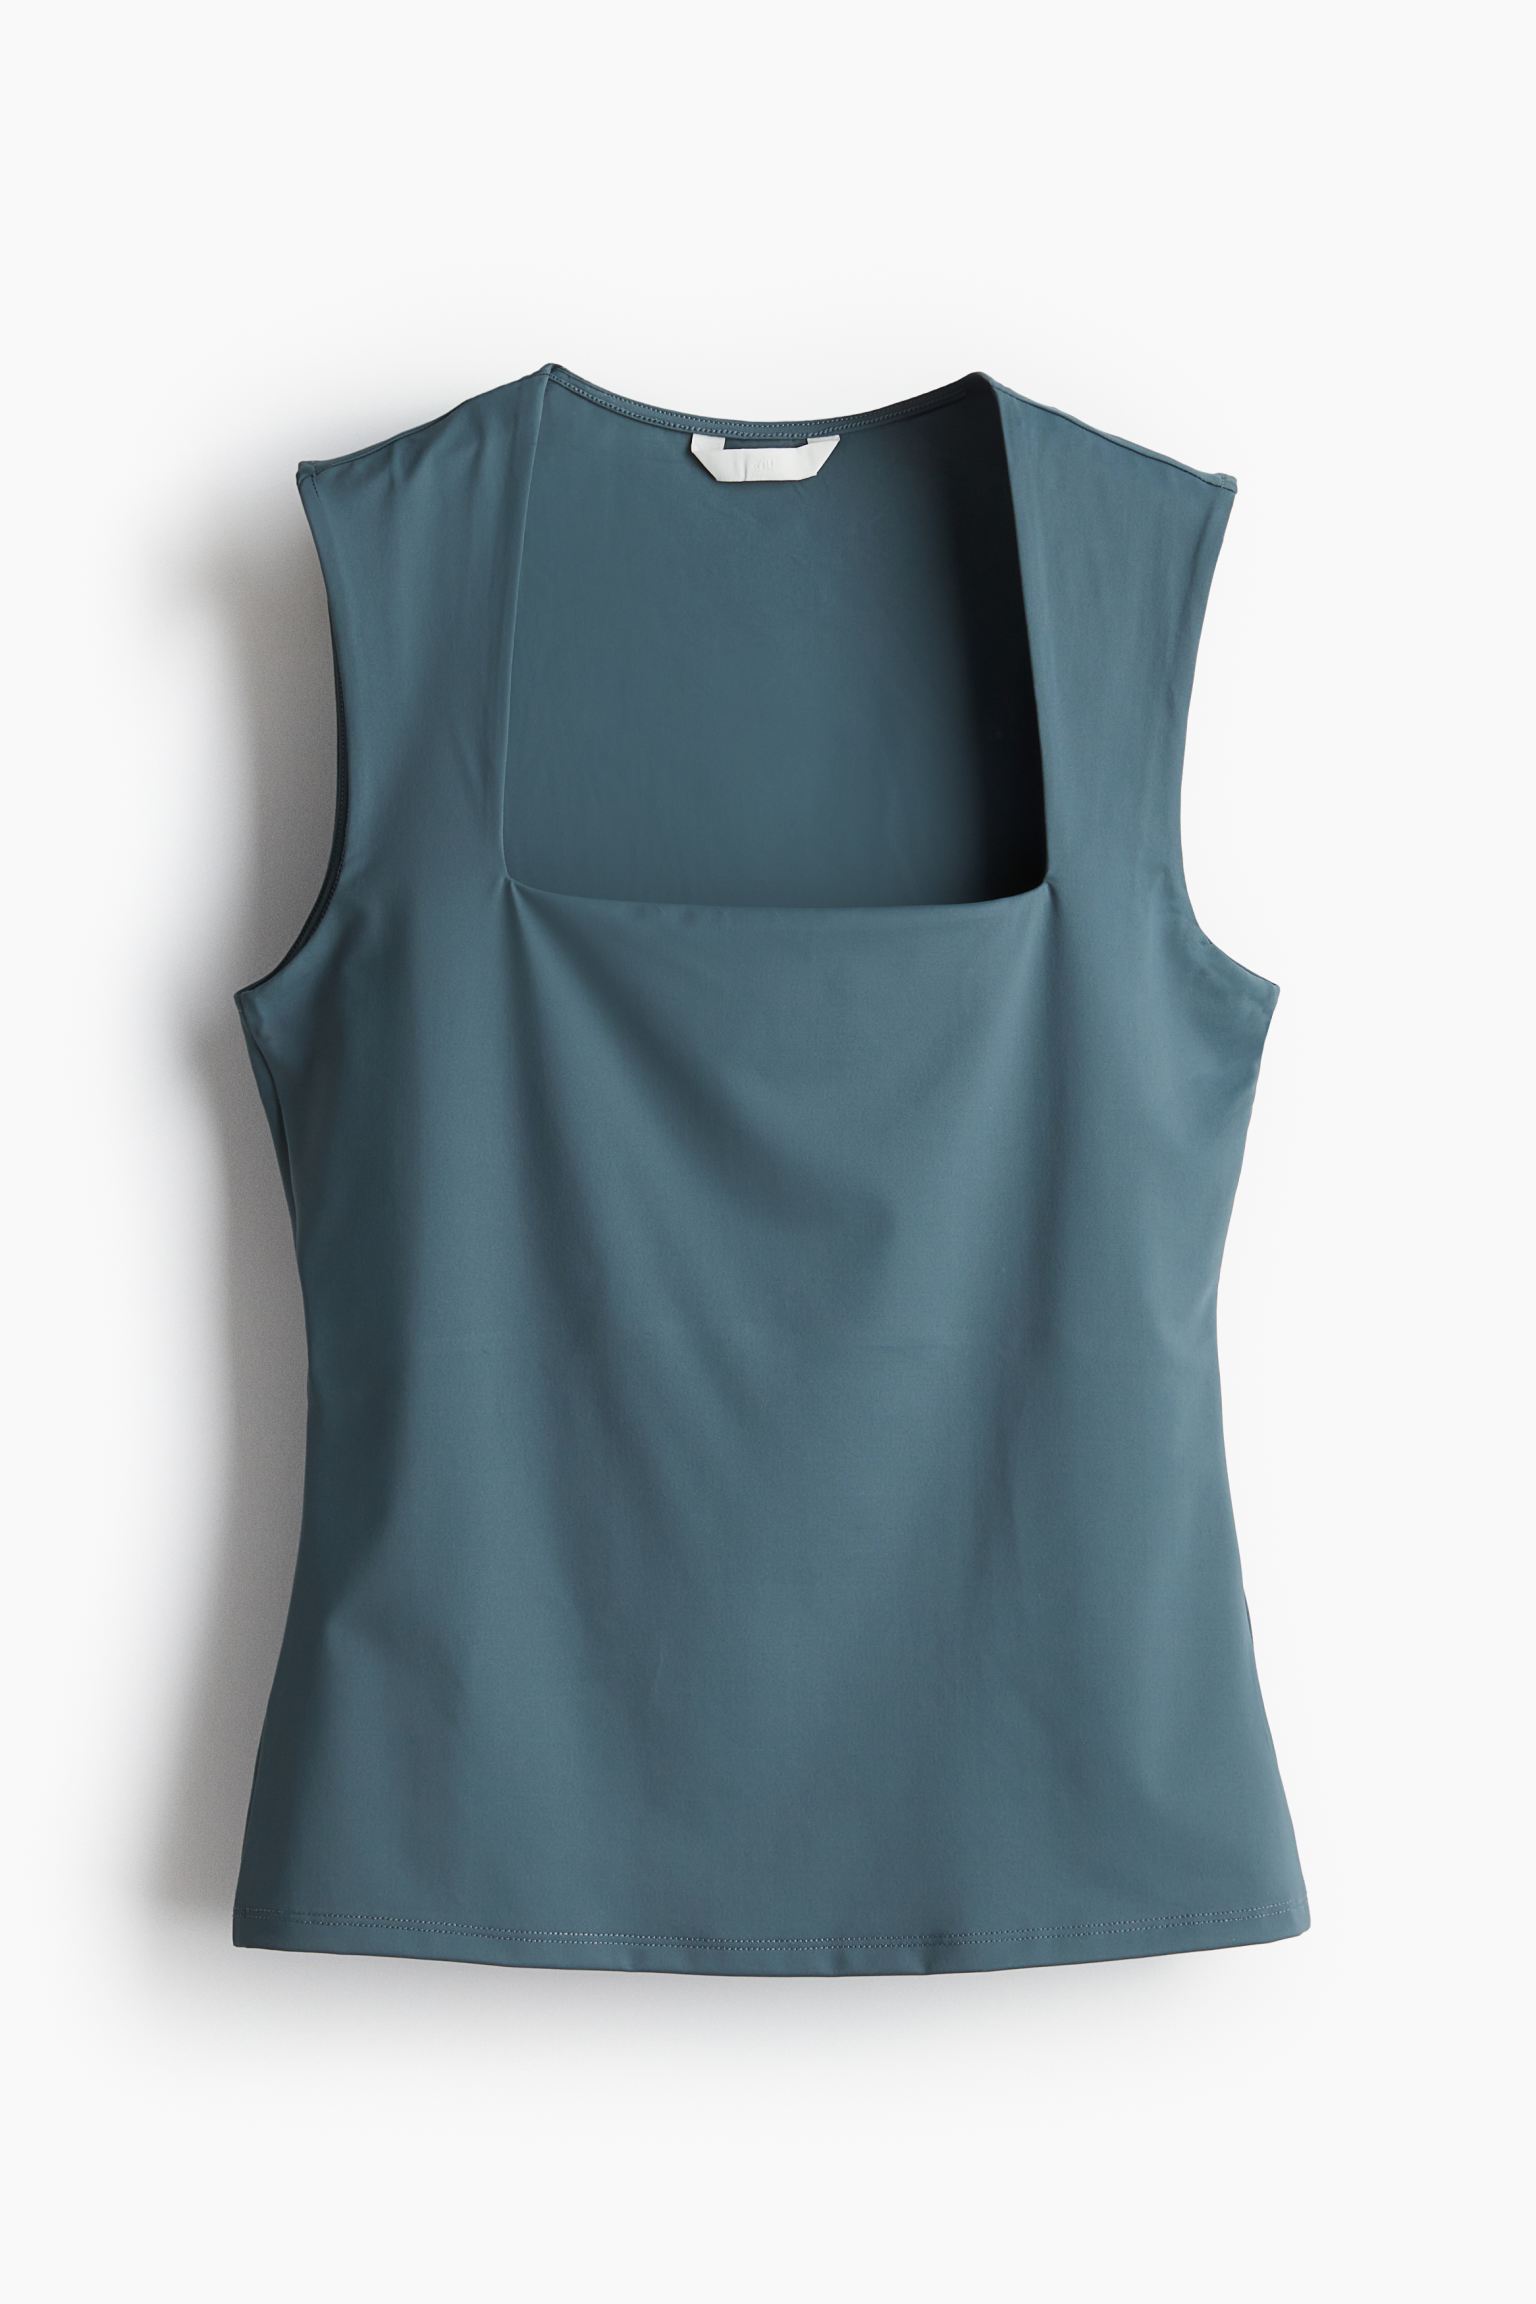 Топ H&M Square-neck Jersey, серо-синий топ бюстгальтер uniqlo square neck printed active wireless синий